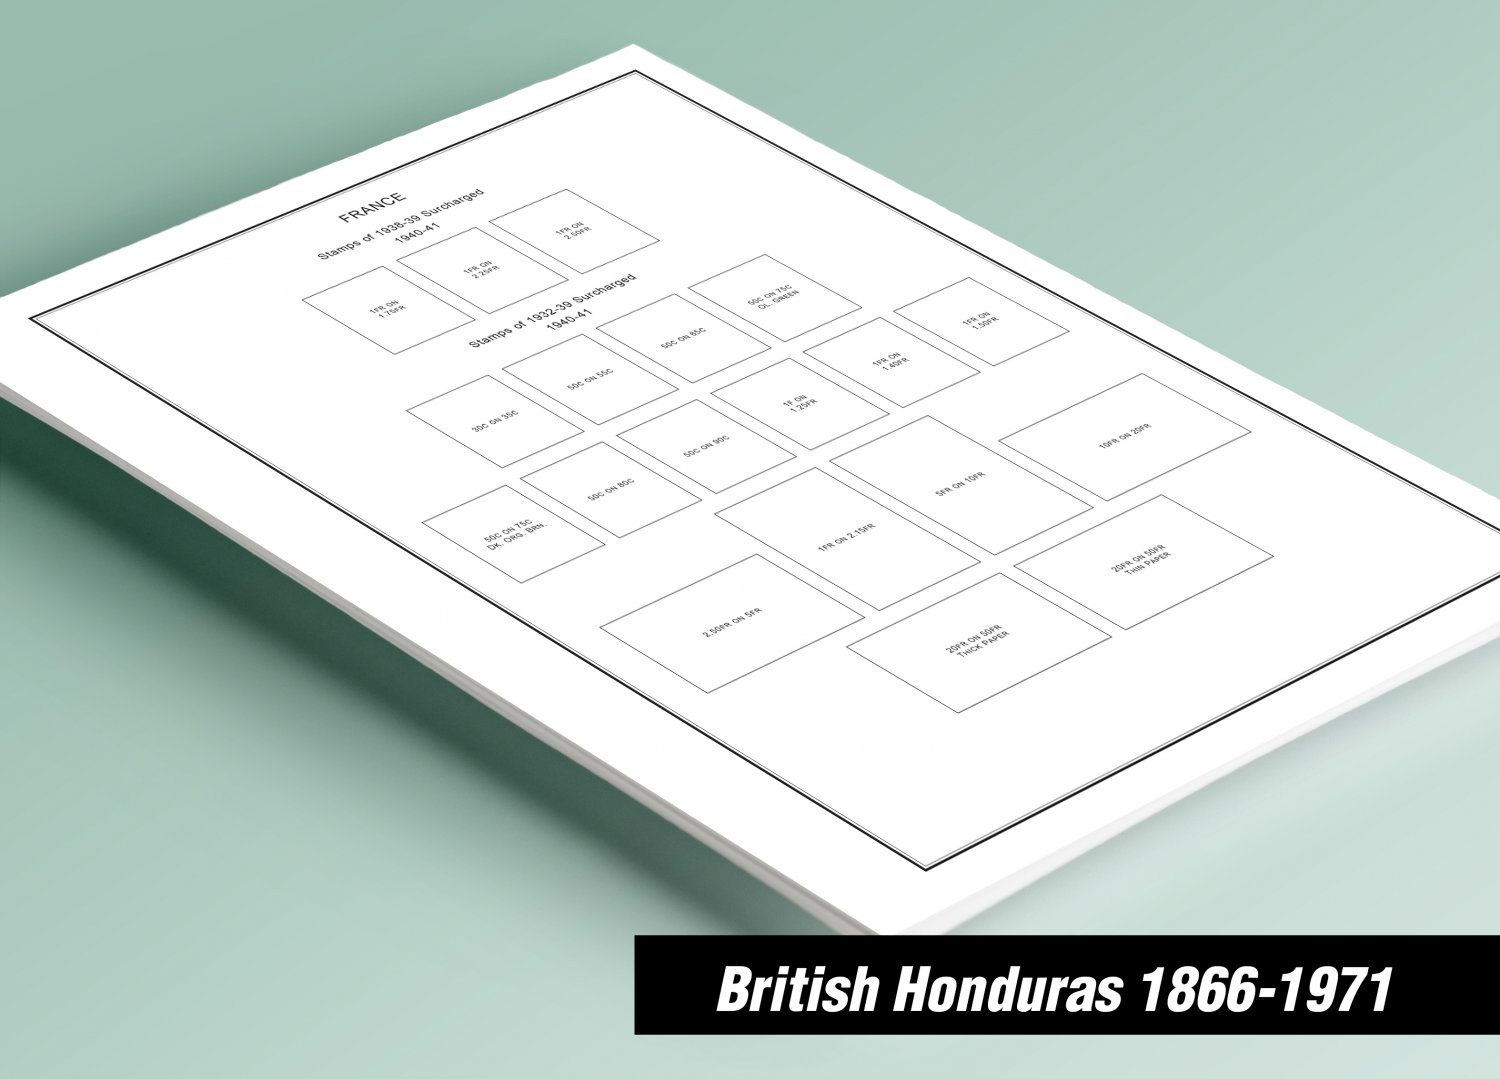 PRINTED BRITISH HONDURAS 1866-1971 STAMP ALBUM PAGES (27 pages)